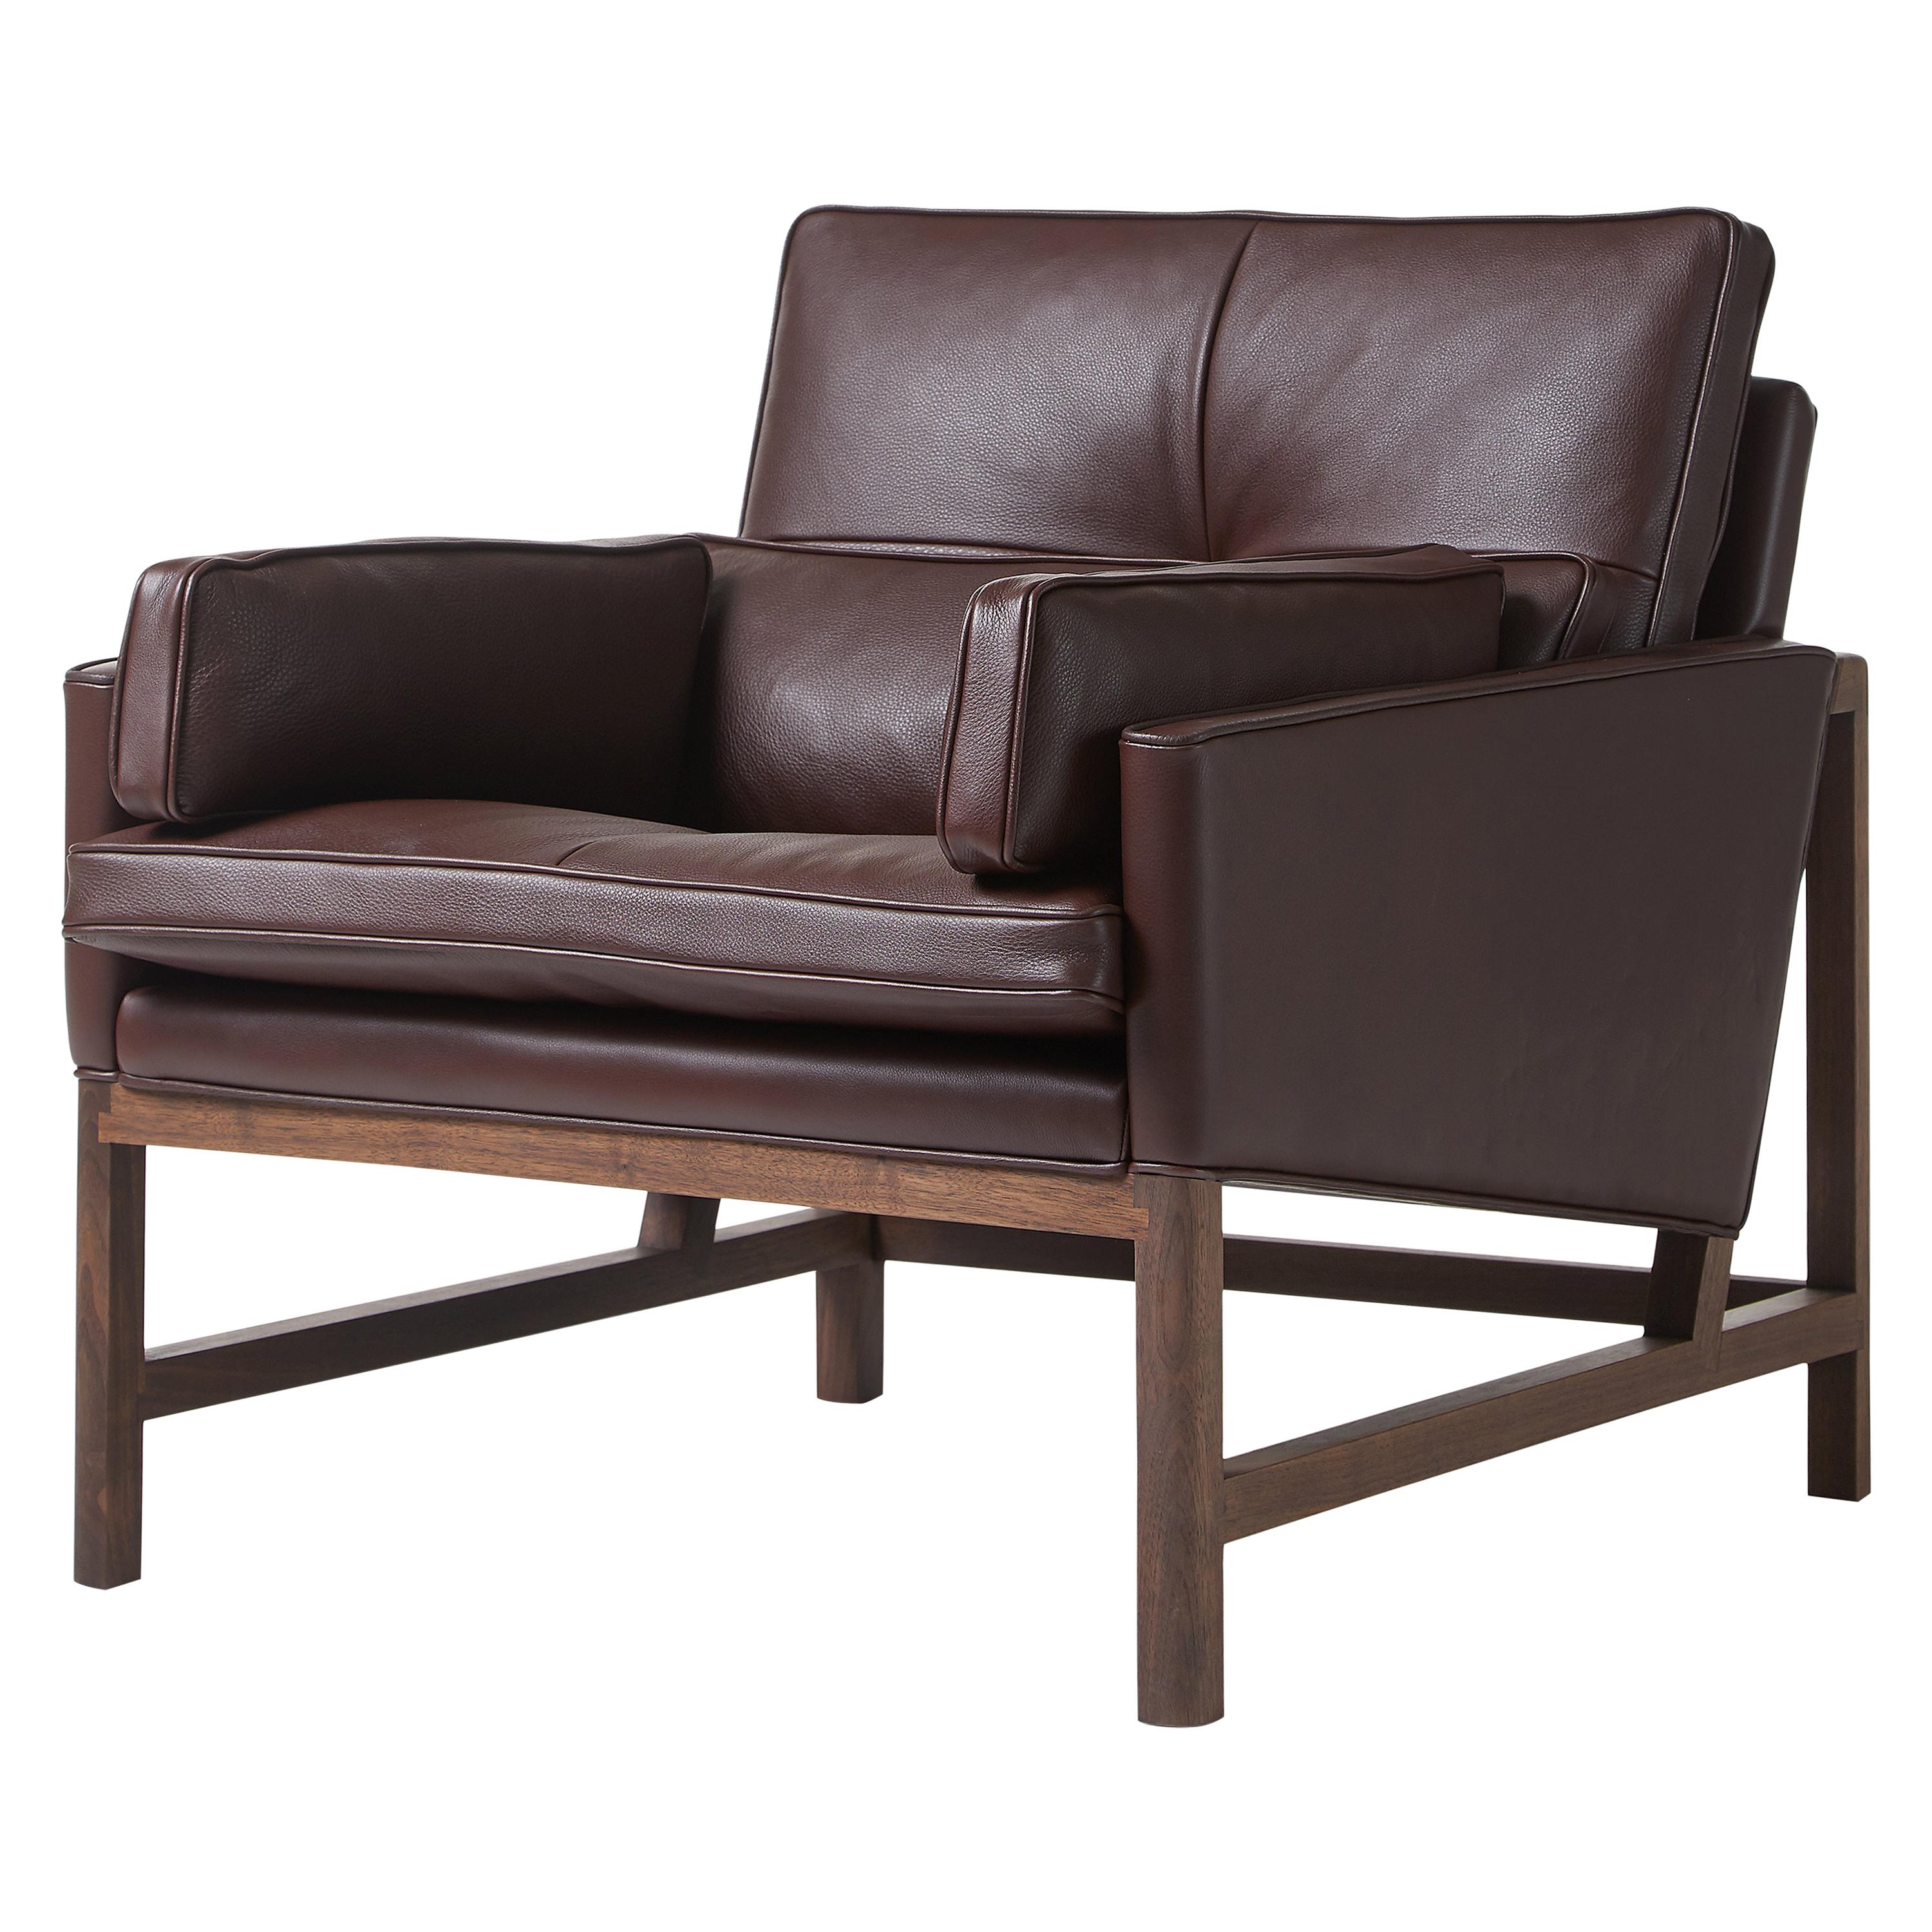 Wood Frame Low Back Lounge Chair in Walnut Black Oil Designed by Craig Bassam